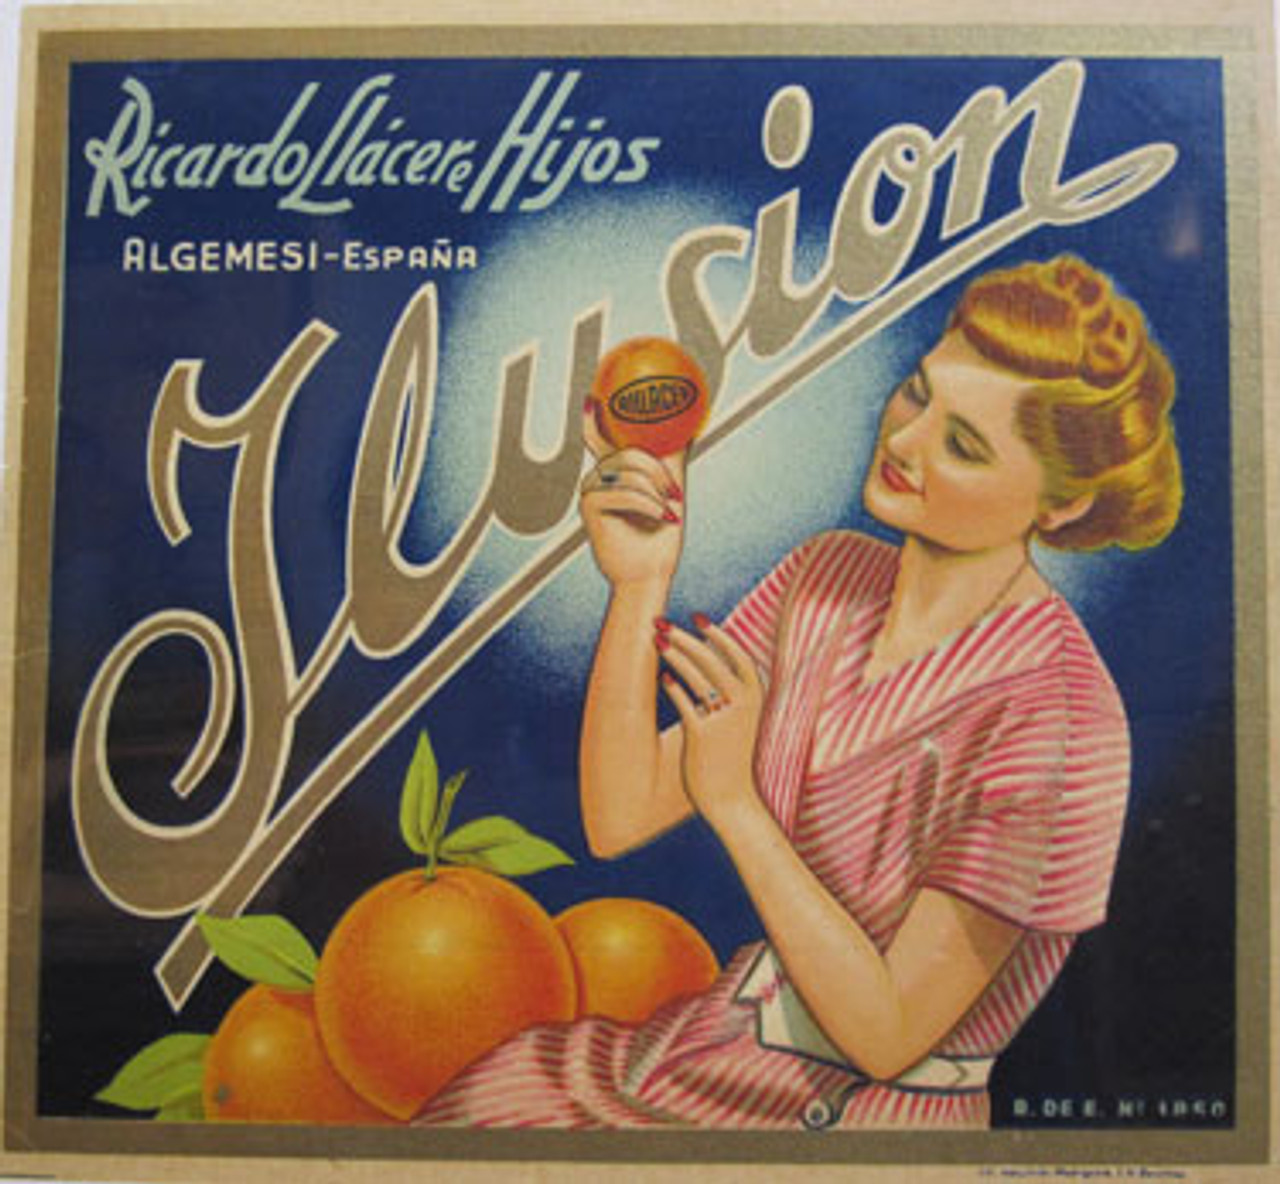 Leusion Ricardo Llacere Hijos Orange company advertisement crate label original vintage antique lithograph poster